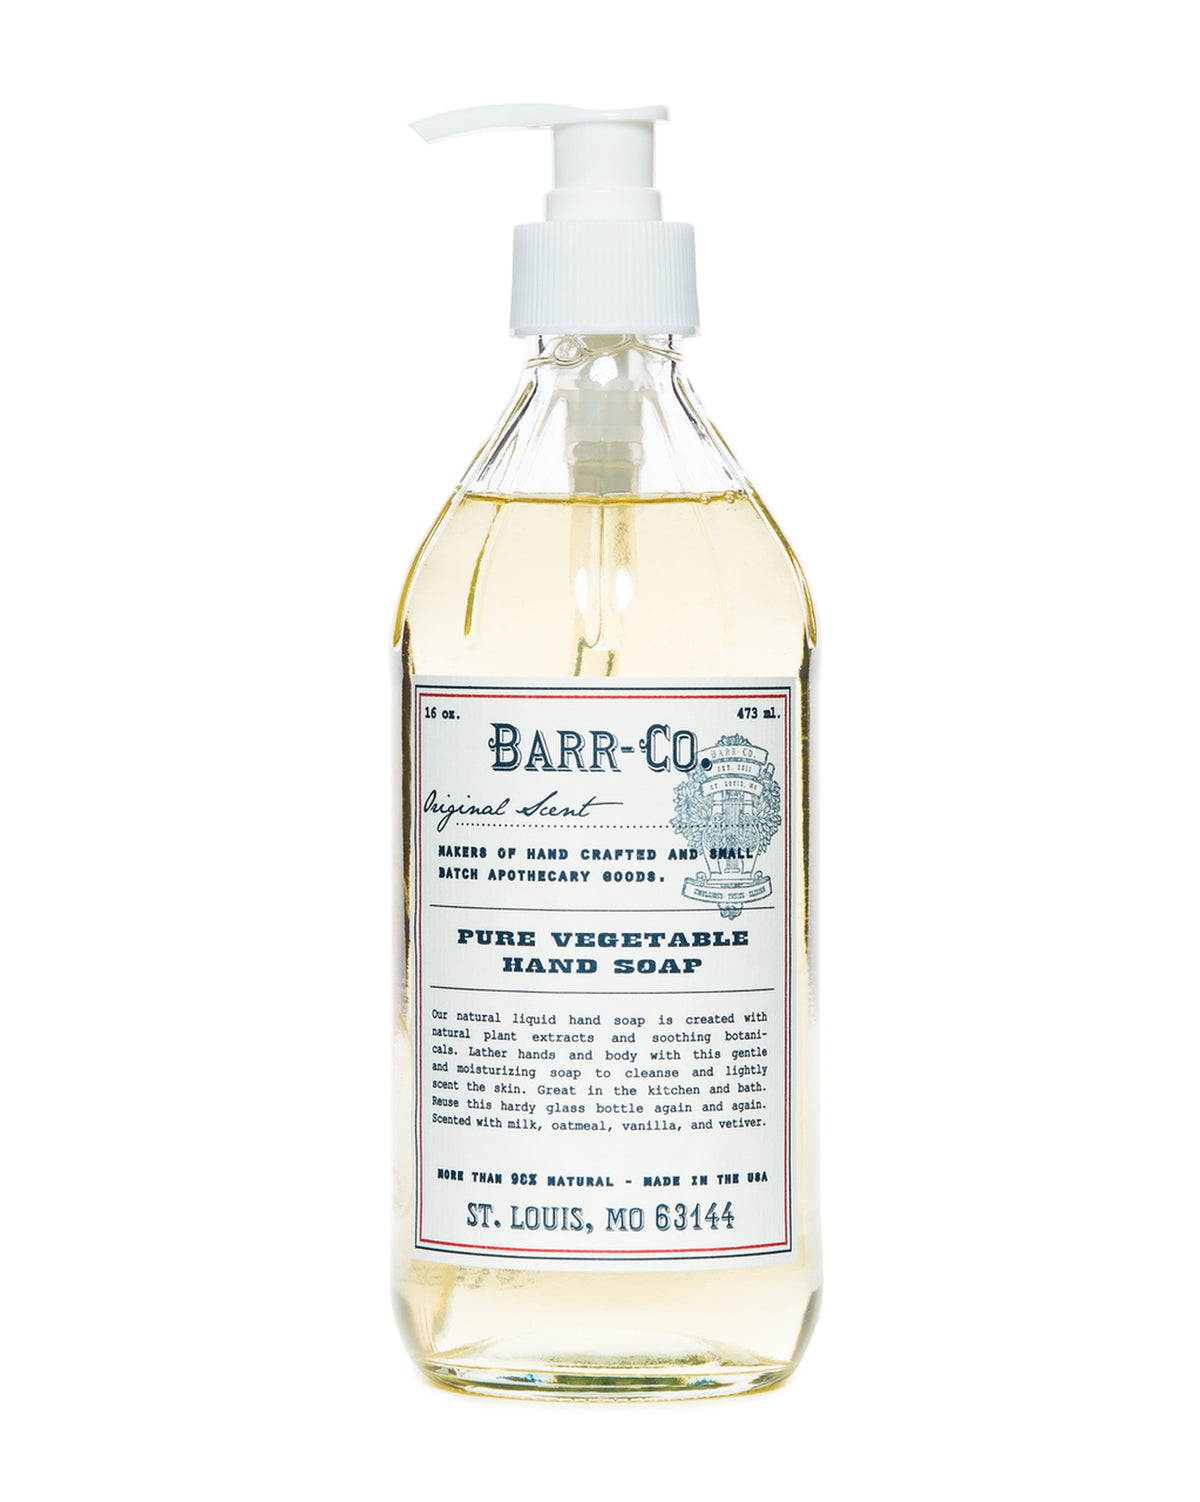 Clear plastic bottle of Barr-Co. Original Scent Liquid Hand Soap with a pump dispenser, featuring a vintage label design.